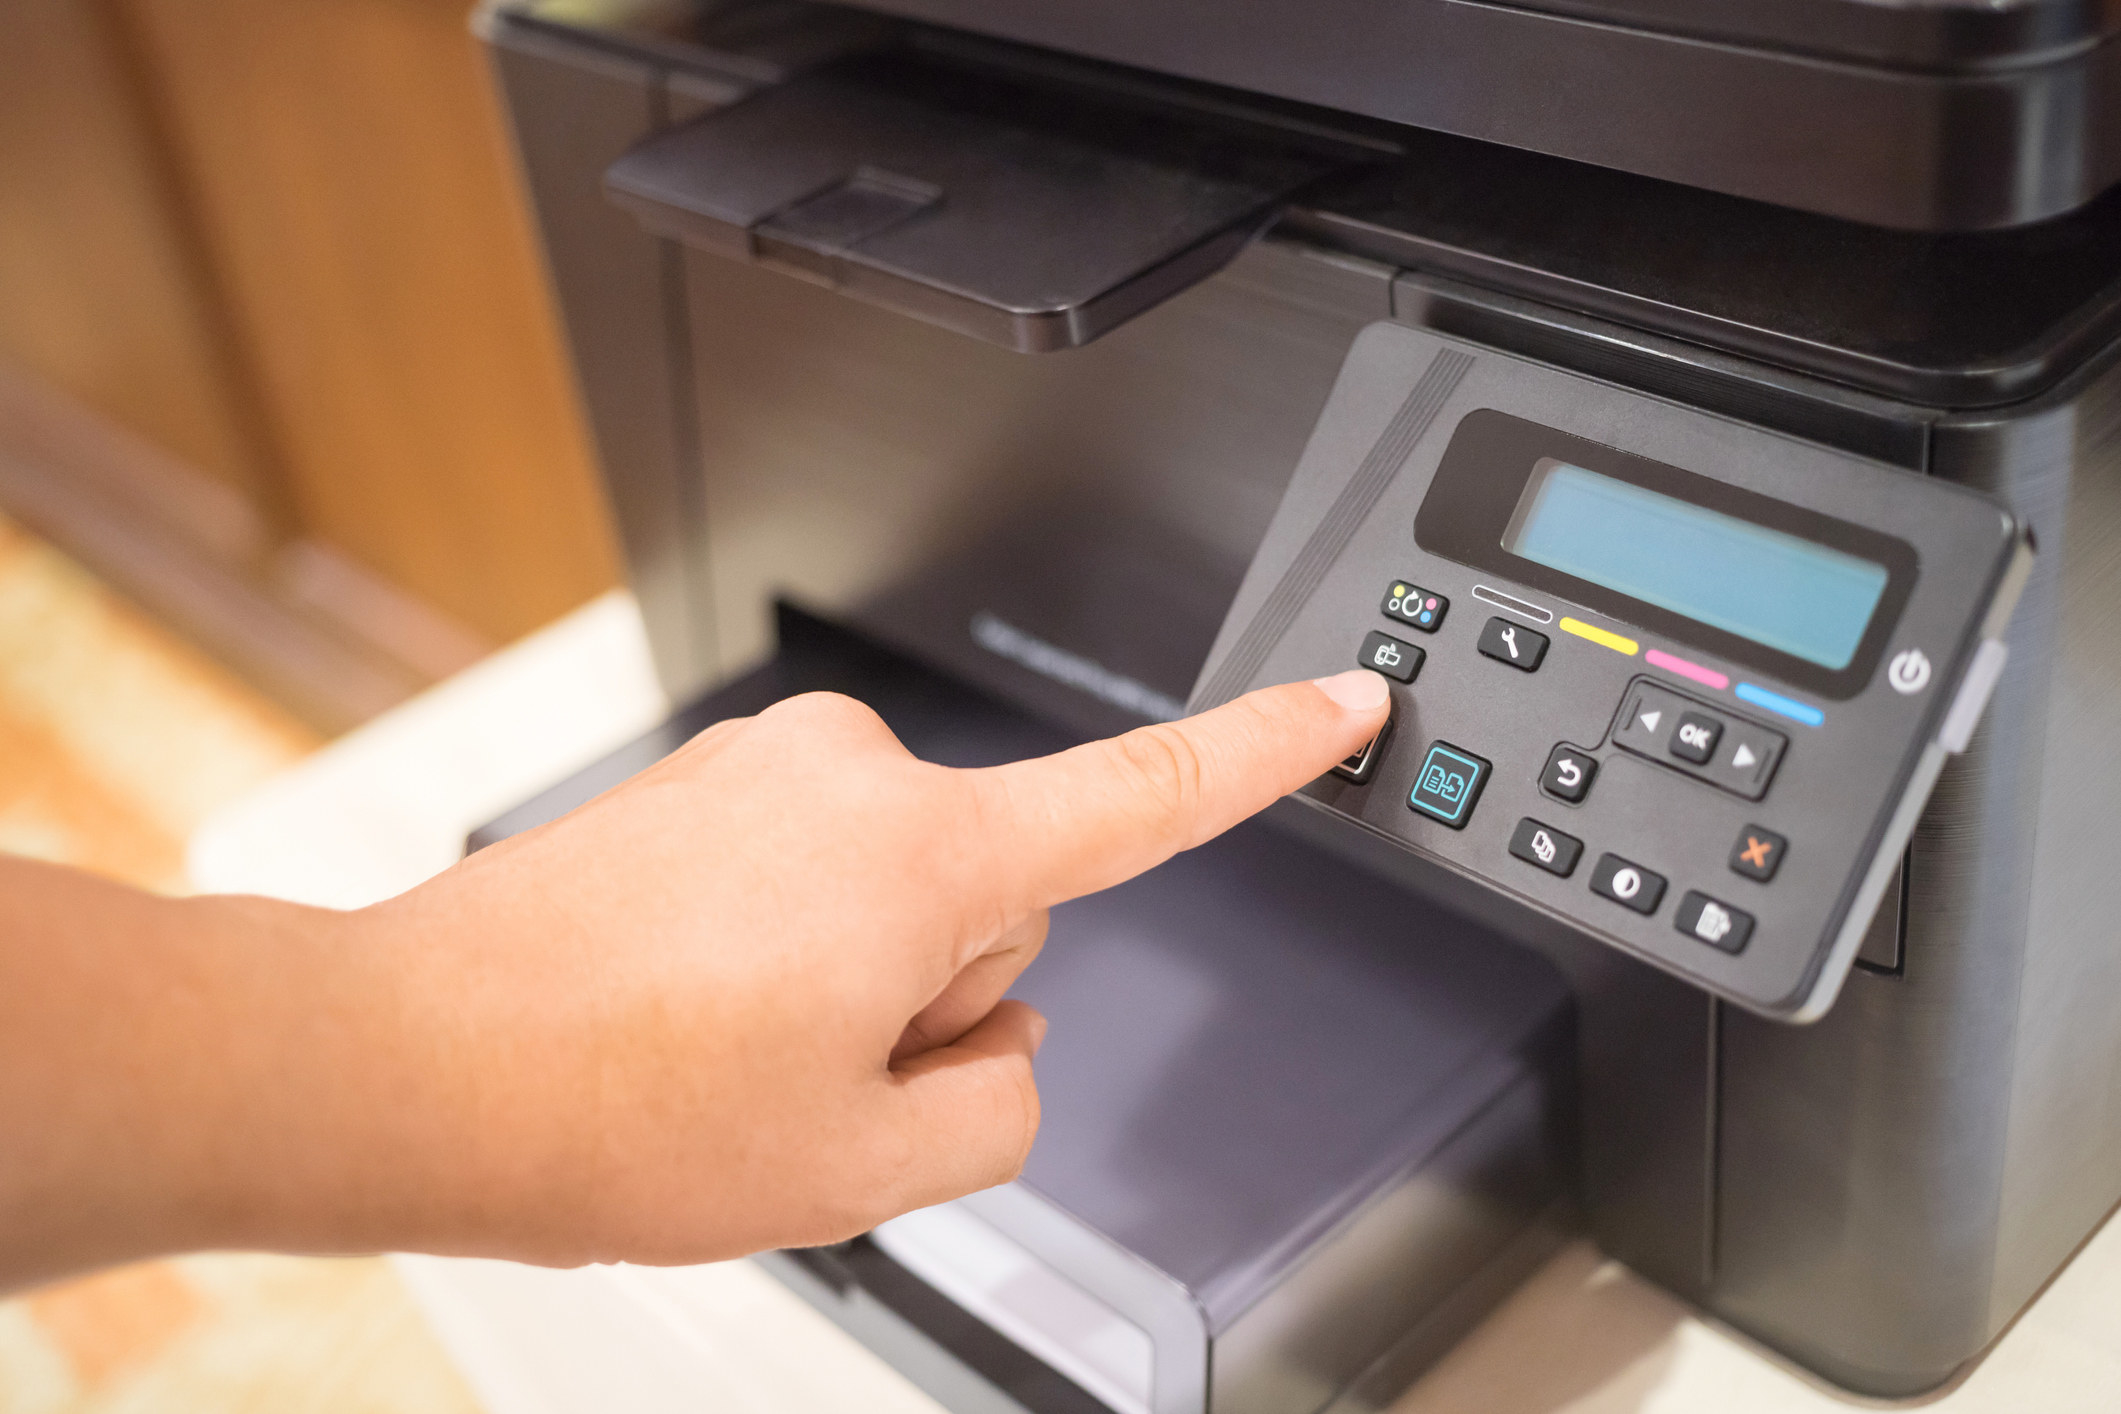 A photo of a finger pressing a button on a computer printer